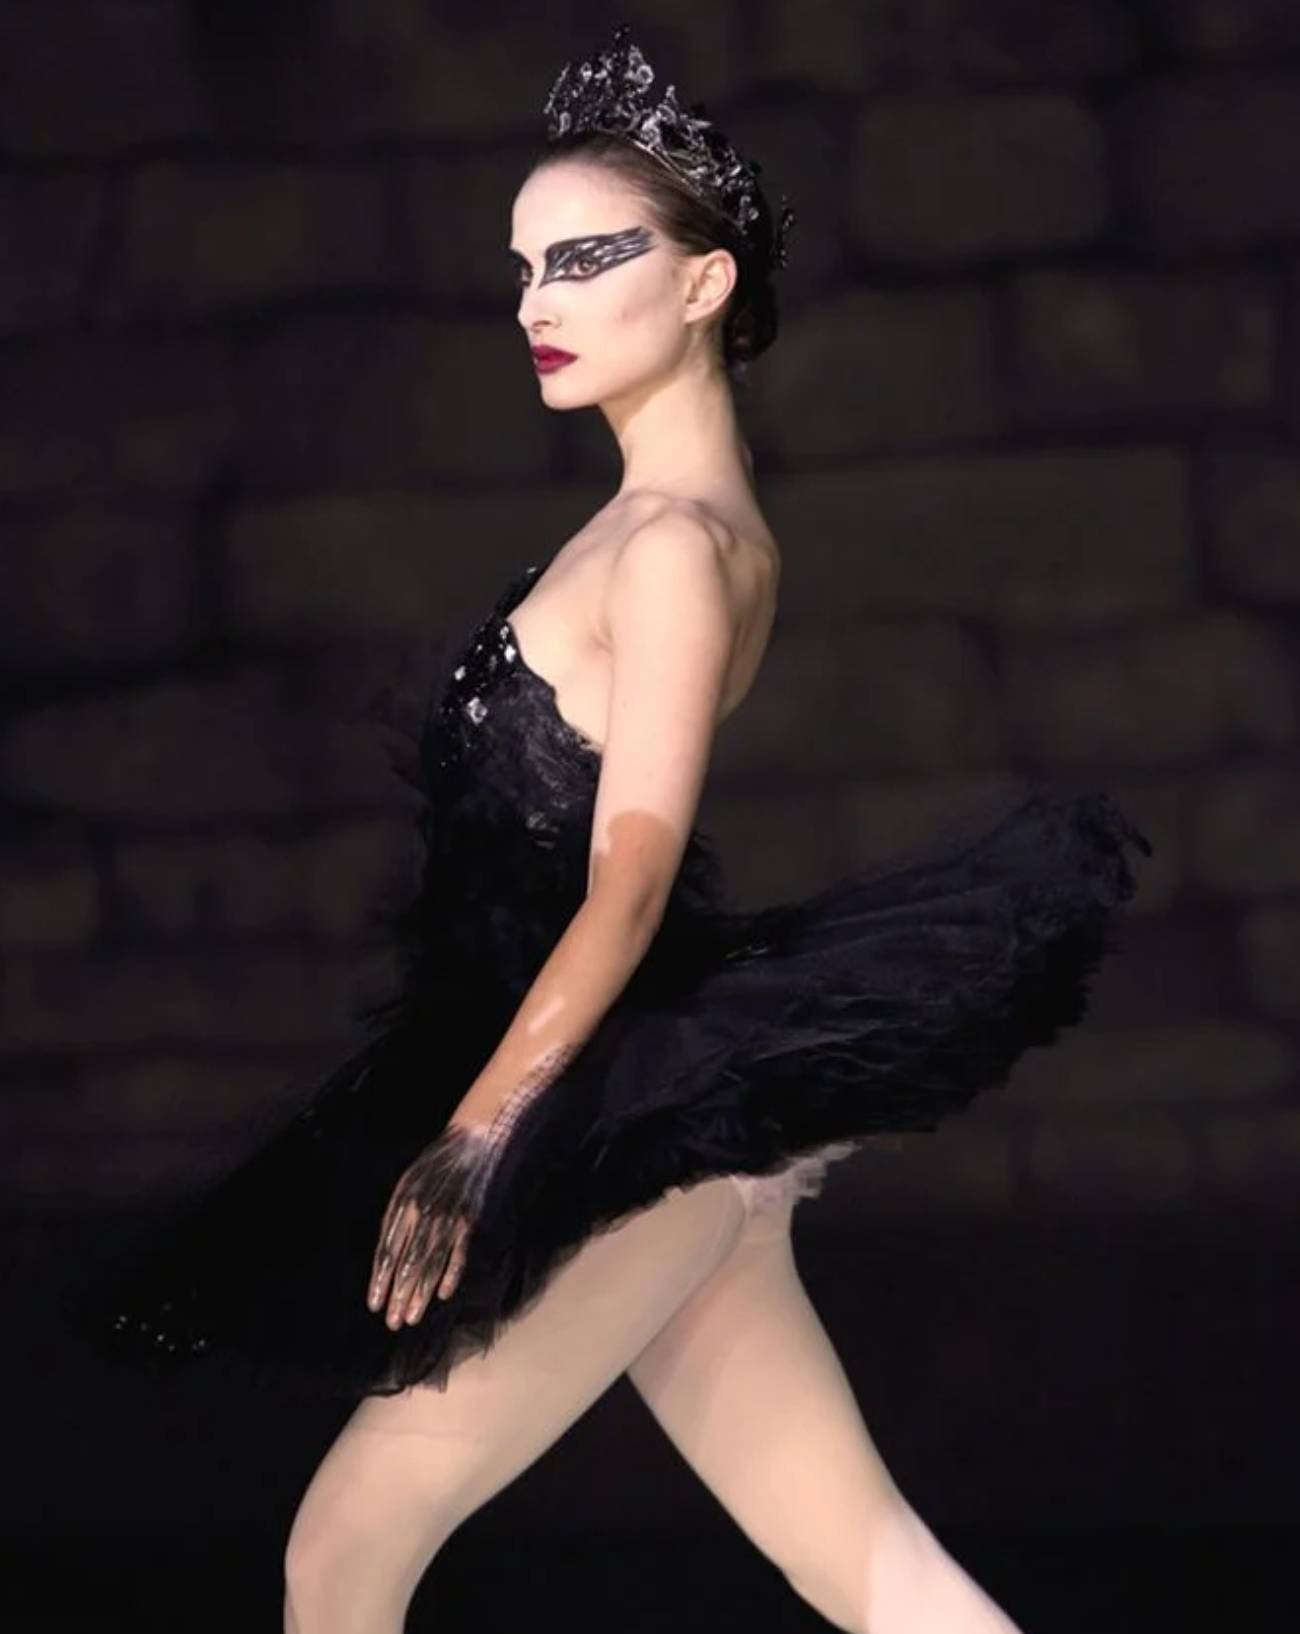 Billy Elliot, Meilleurs Films sur la danse, Black Swan, Natalie Portman